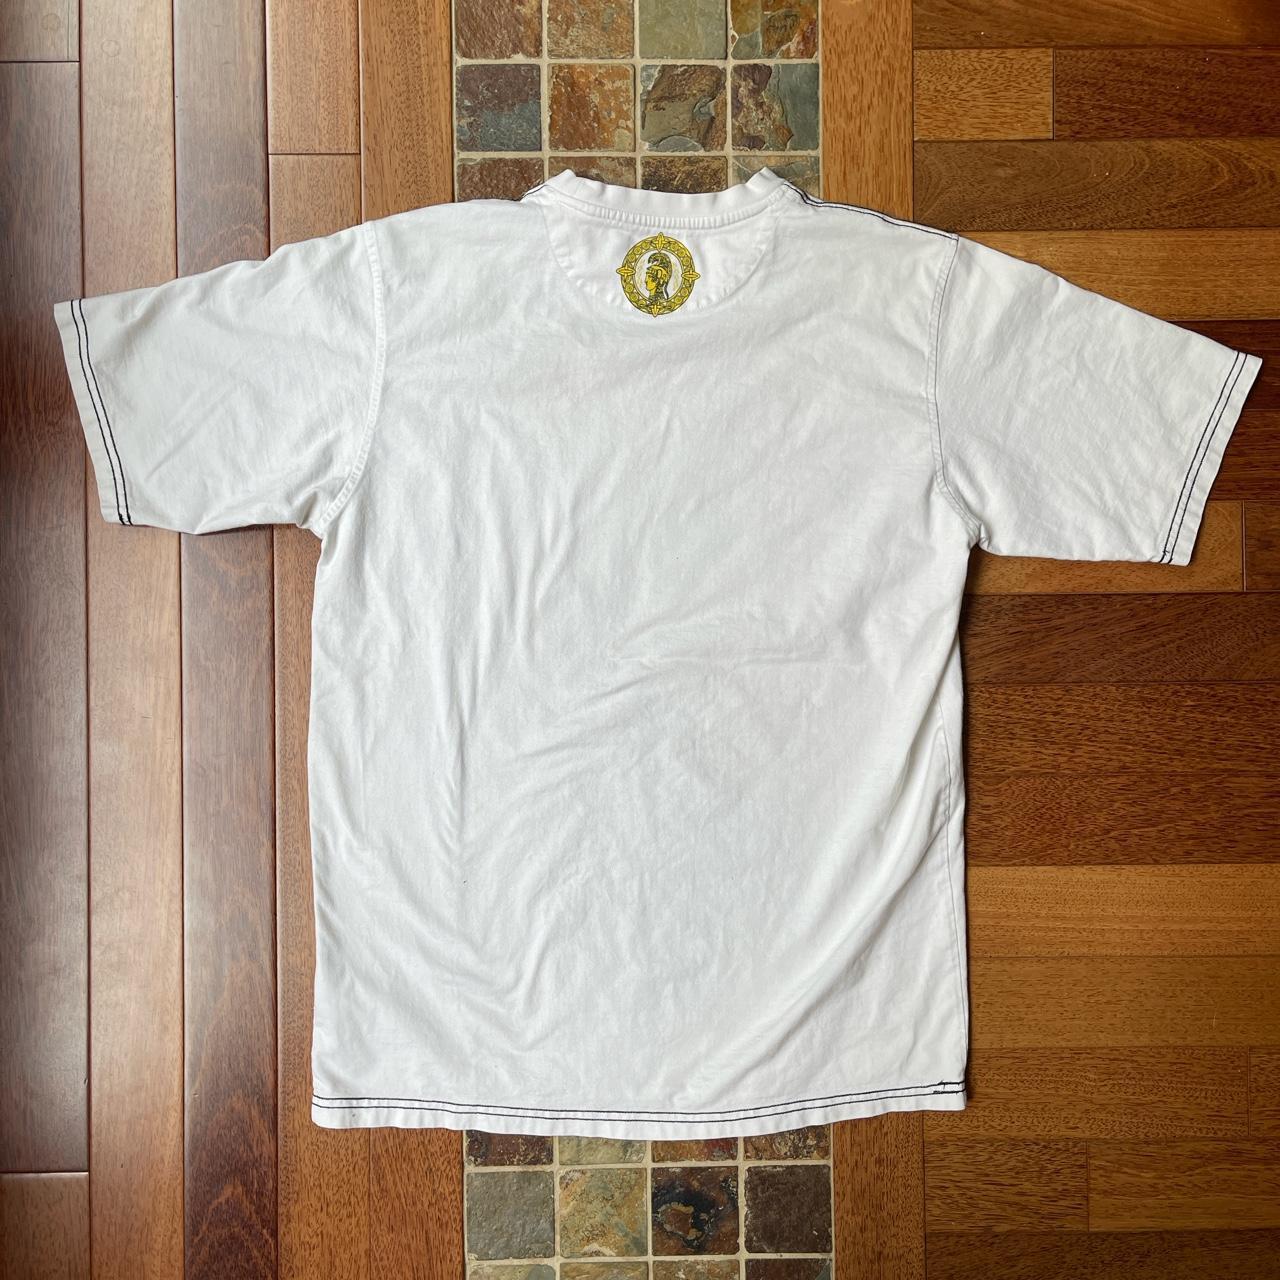 Coogi Men's White and Gold T-shirt (3)